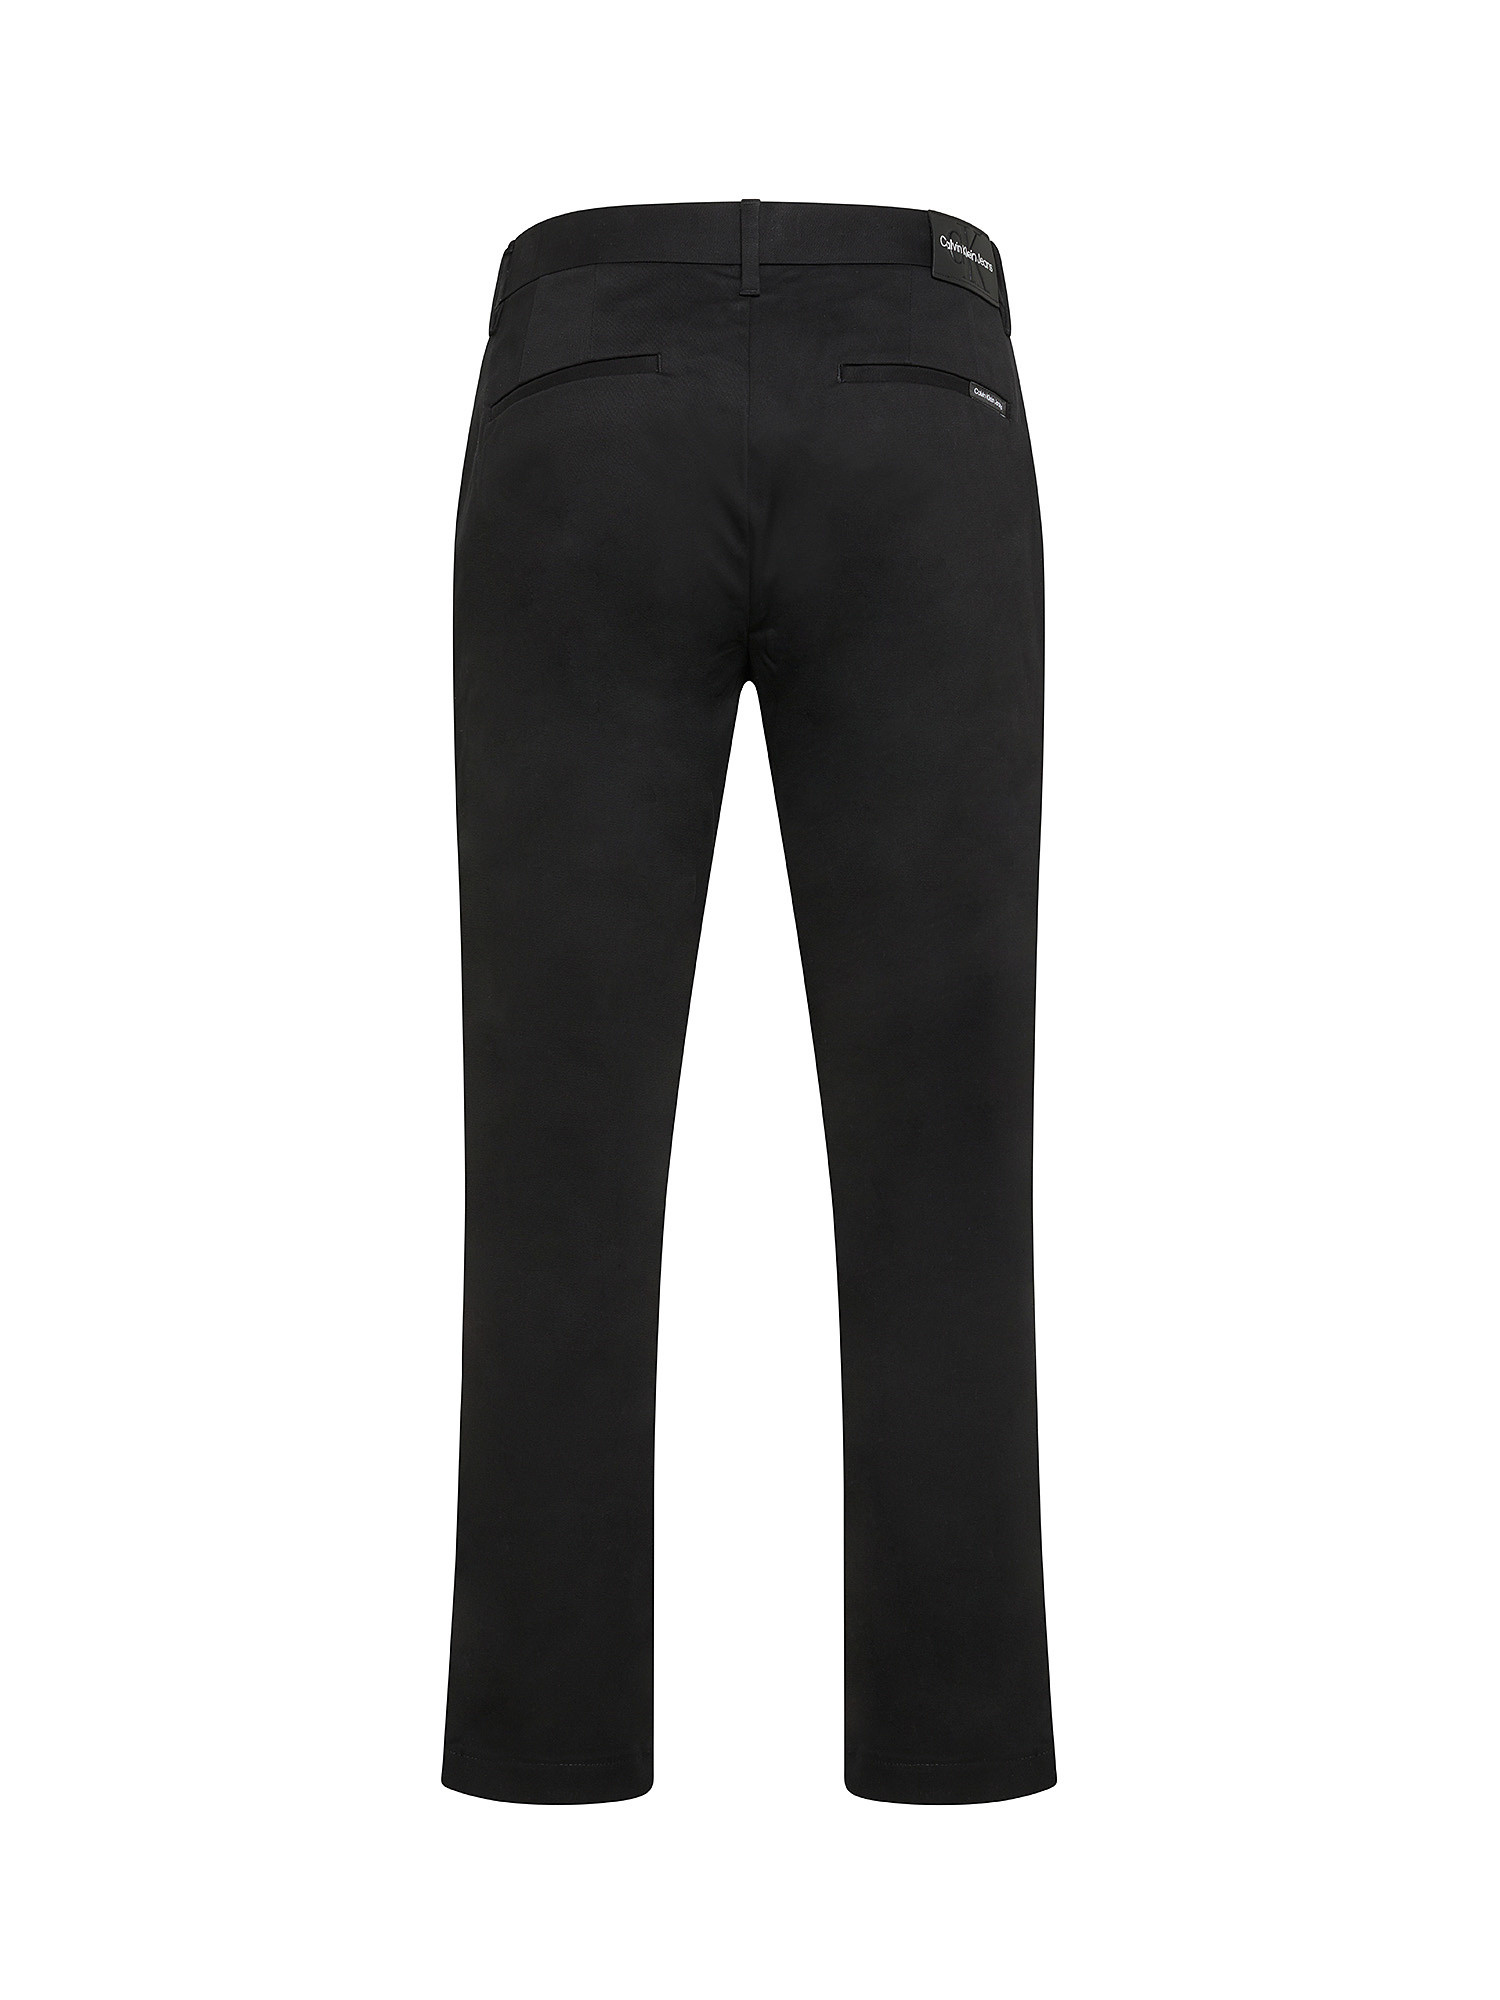 Calvin Klein Jeans - Pantaloni slim fit, Nero, large image number 1